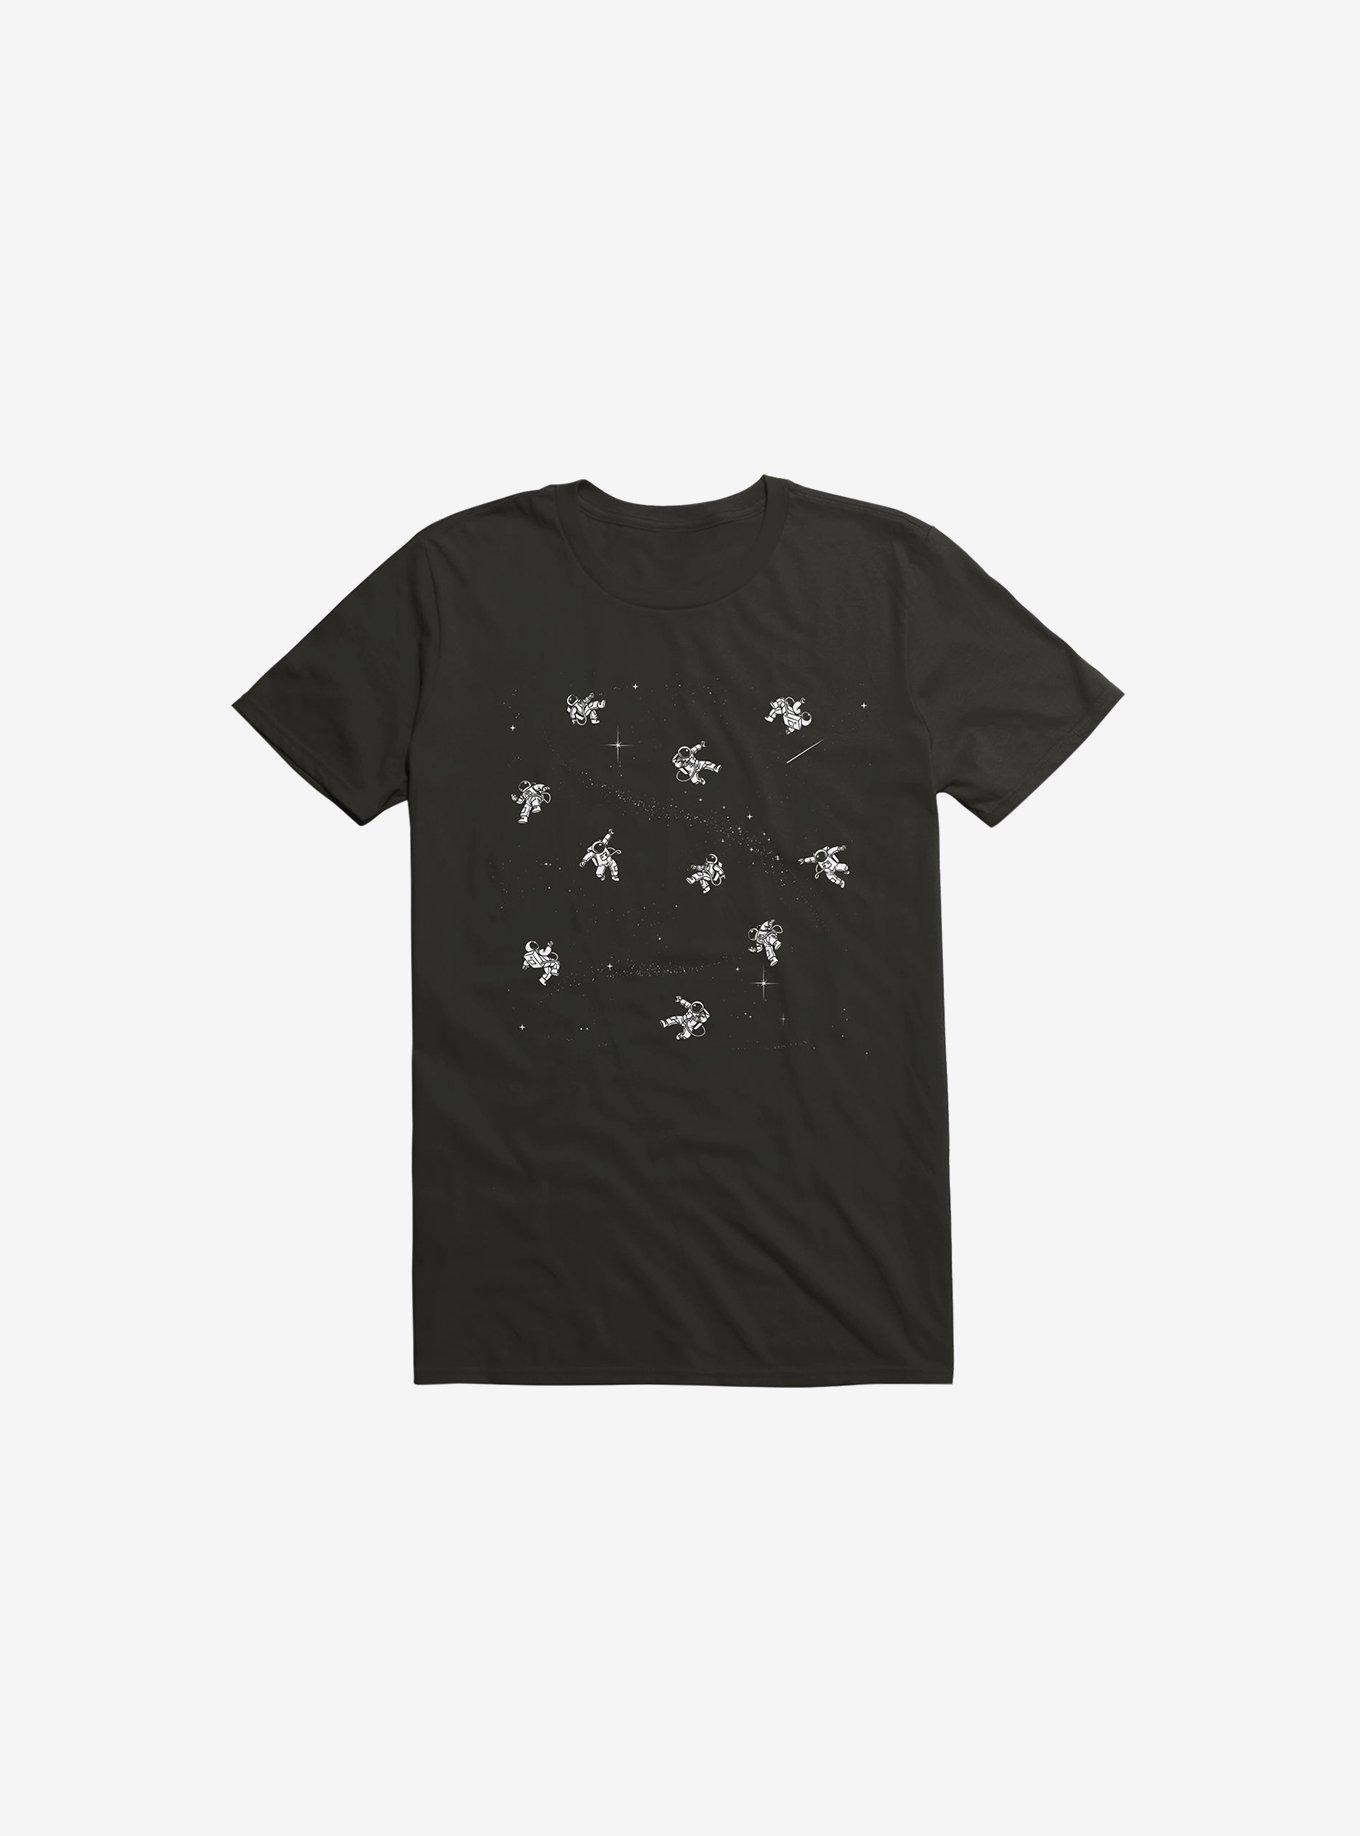 Gravity Reloaded Astronauts Black T-Shirt, BLACK, hi-res